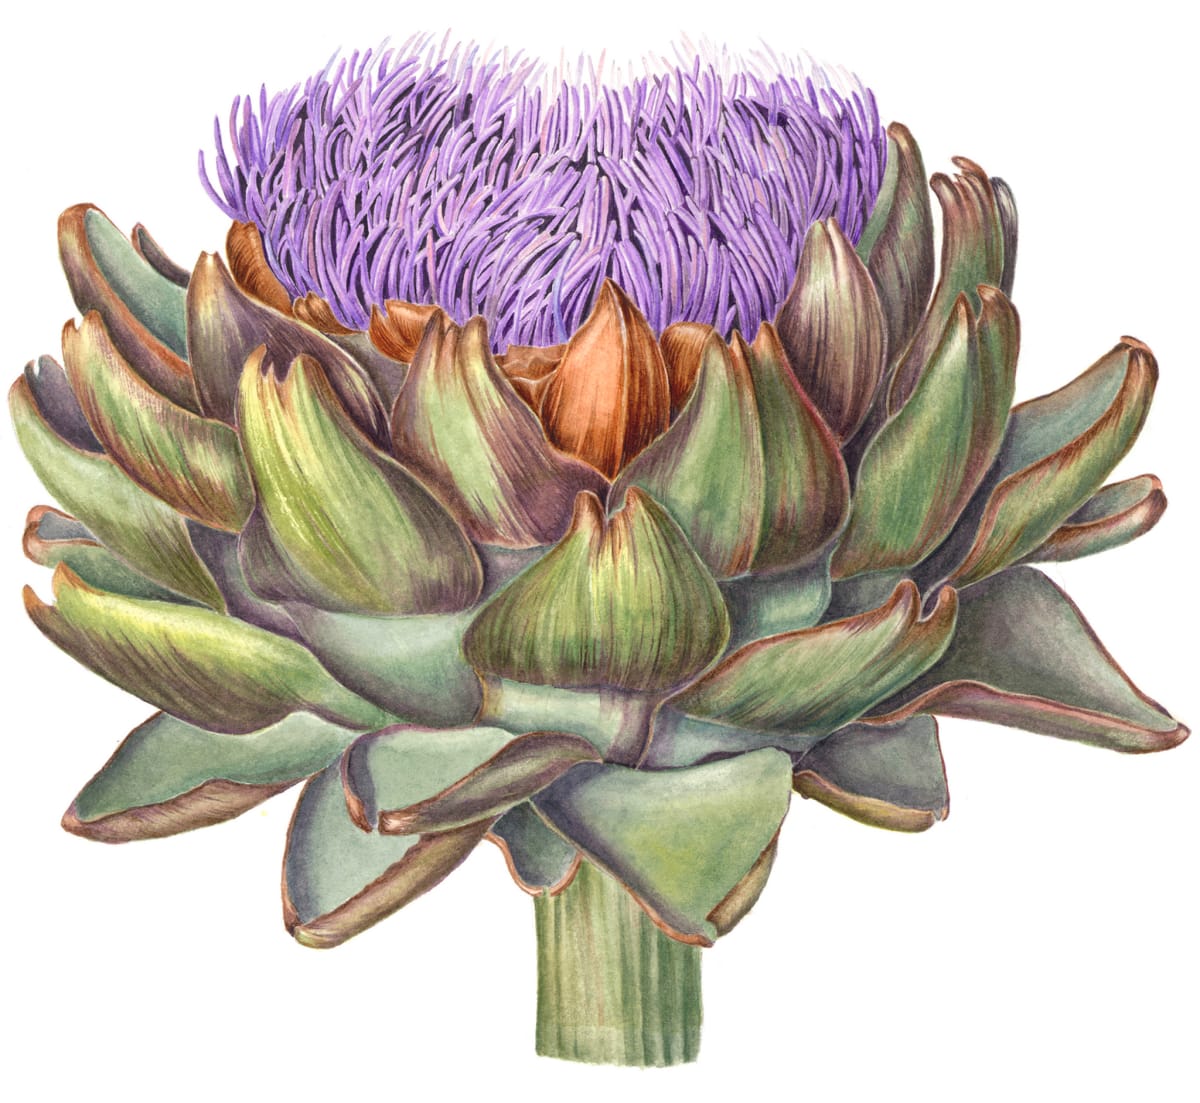 Flowering Artichoke by Sally Jacobs 